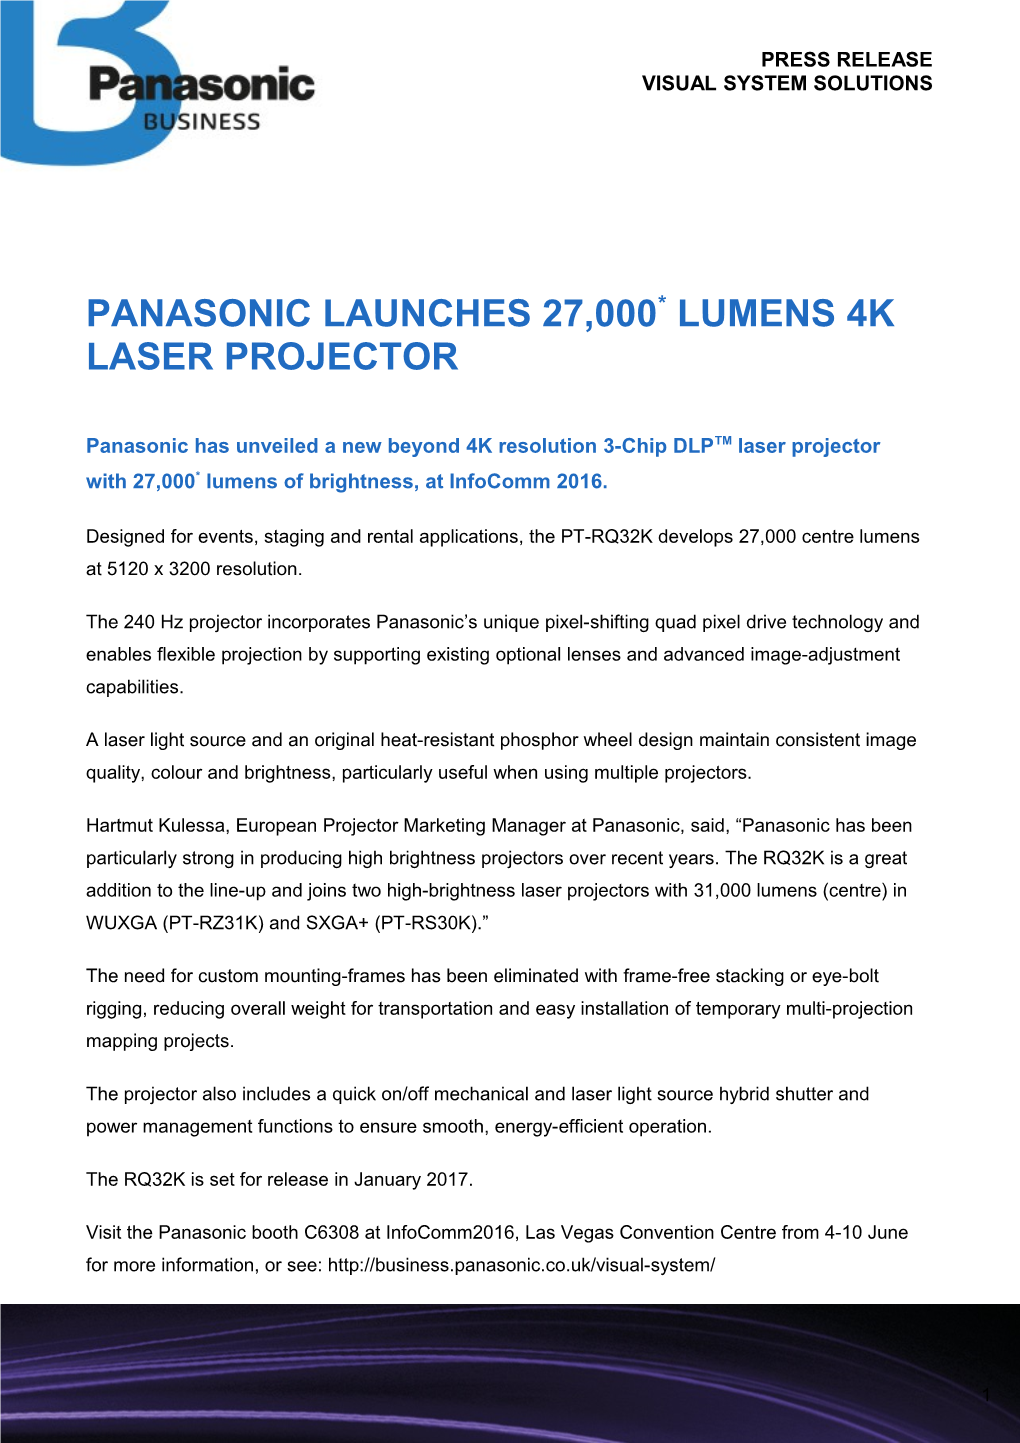 Panasonic Launches 27,000* Lumens 4K Laser Projector